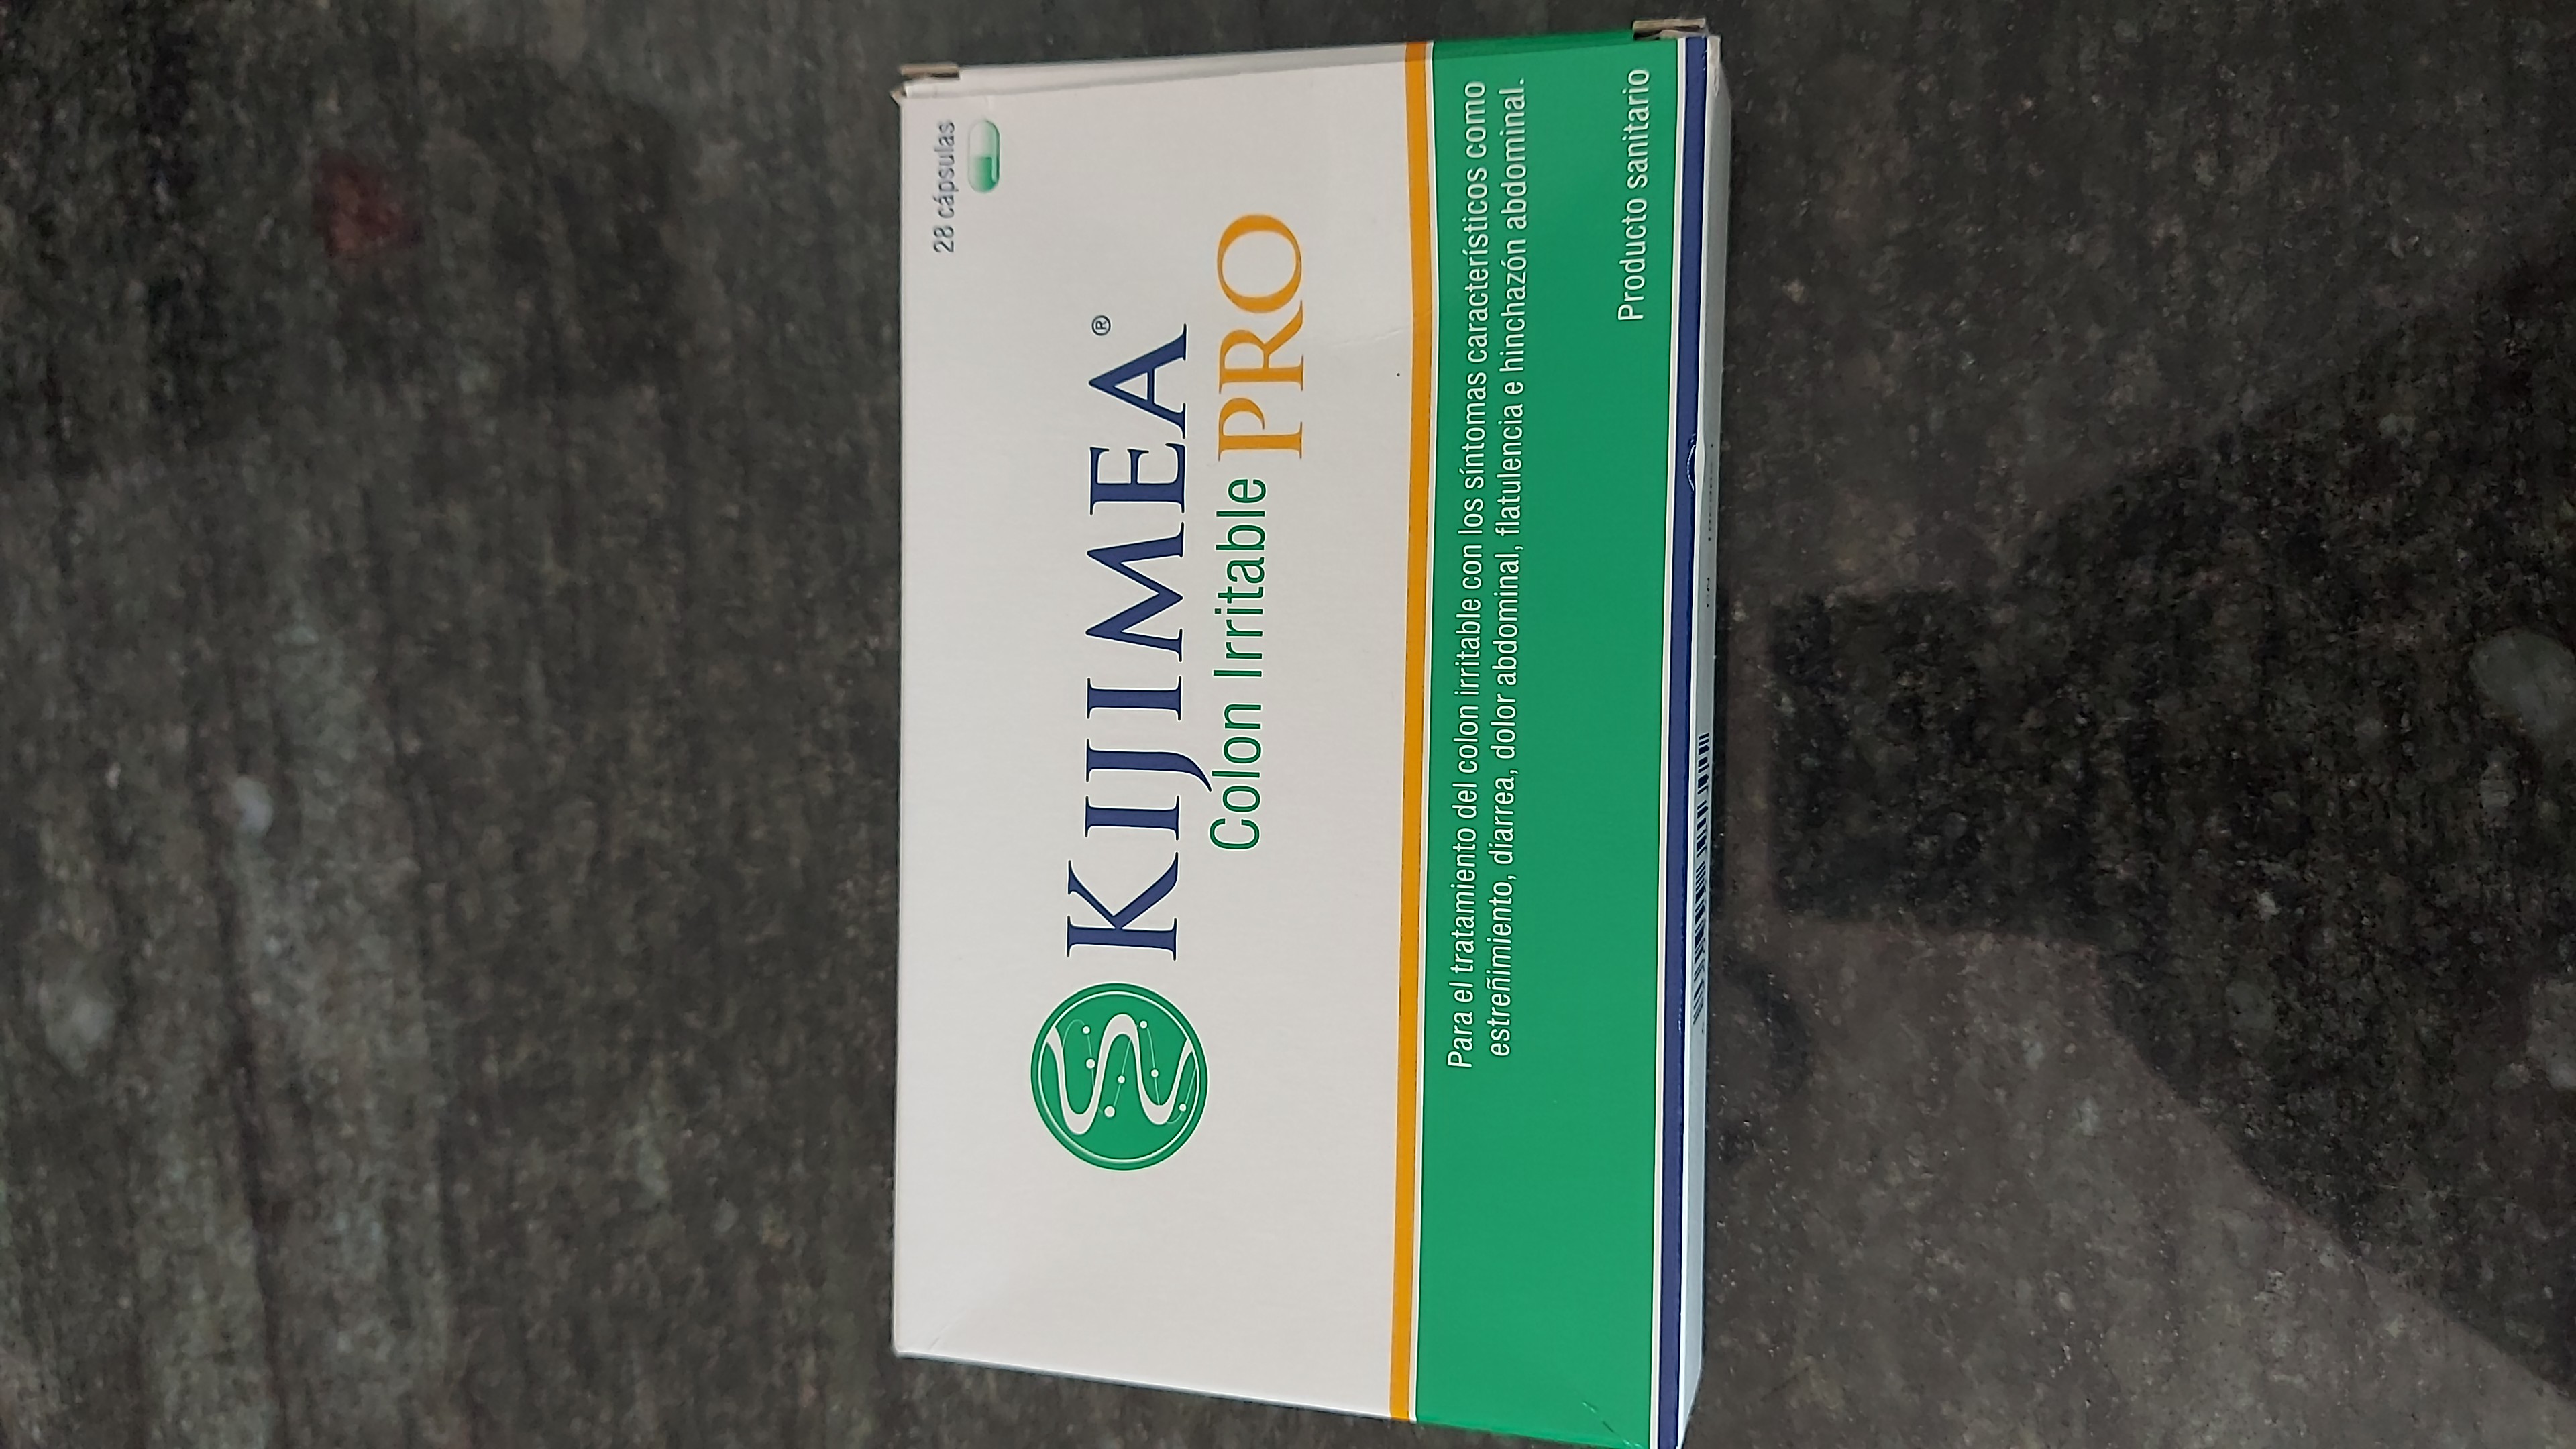 Kijimea Pro Colon Irritable 28 cápsulas Nº Comprimidos 28 Cápsulas